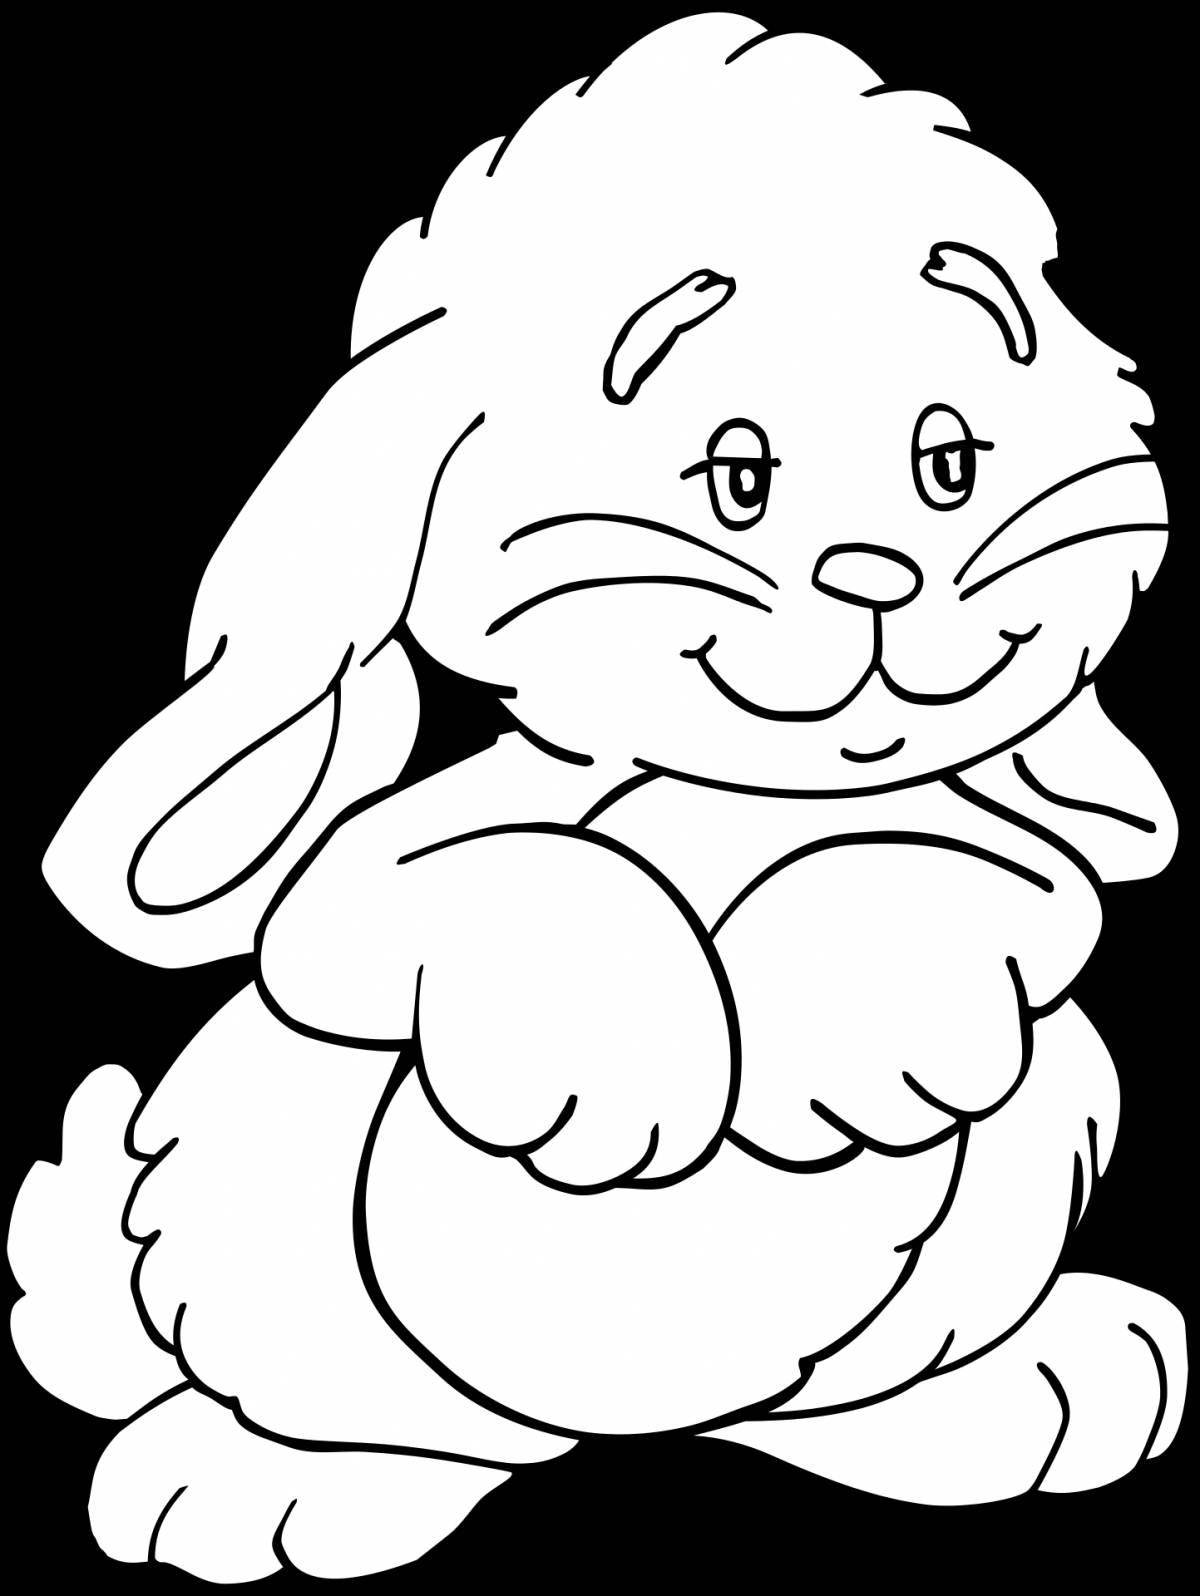 Fluffy angora rabbit coloring page